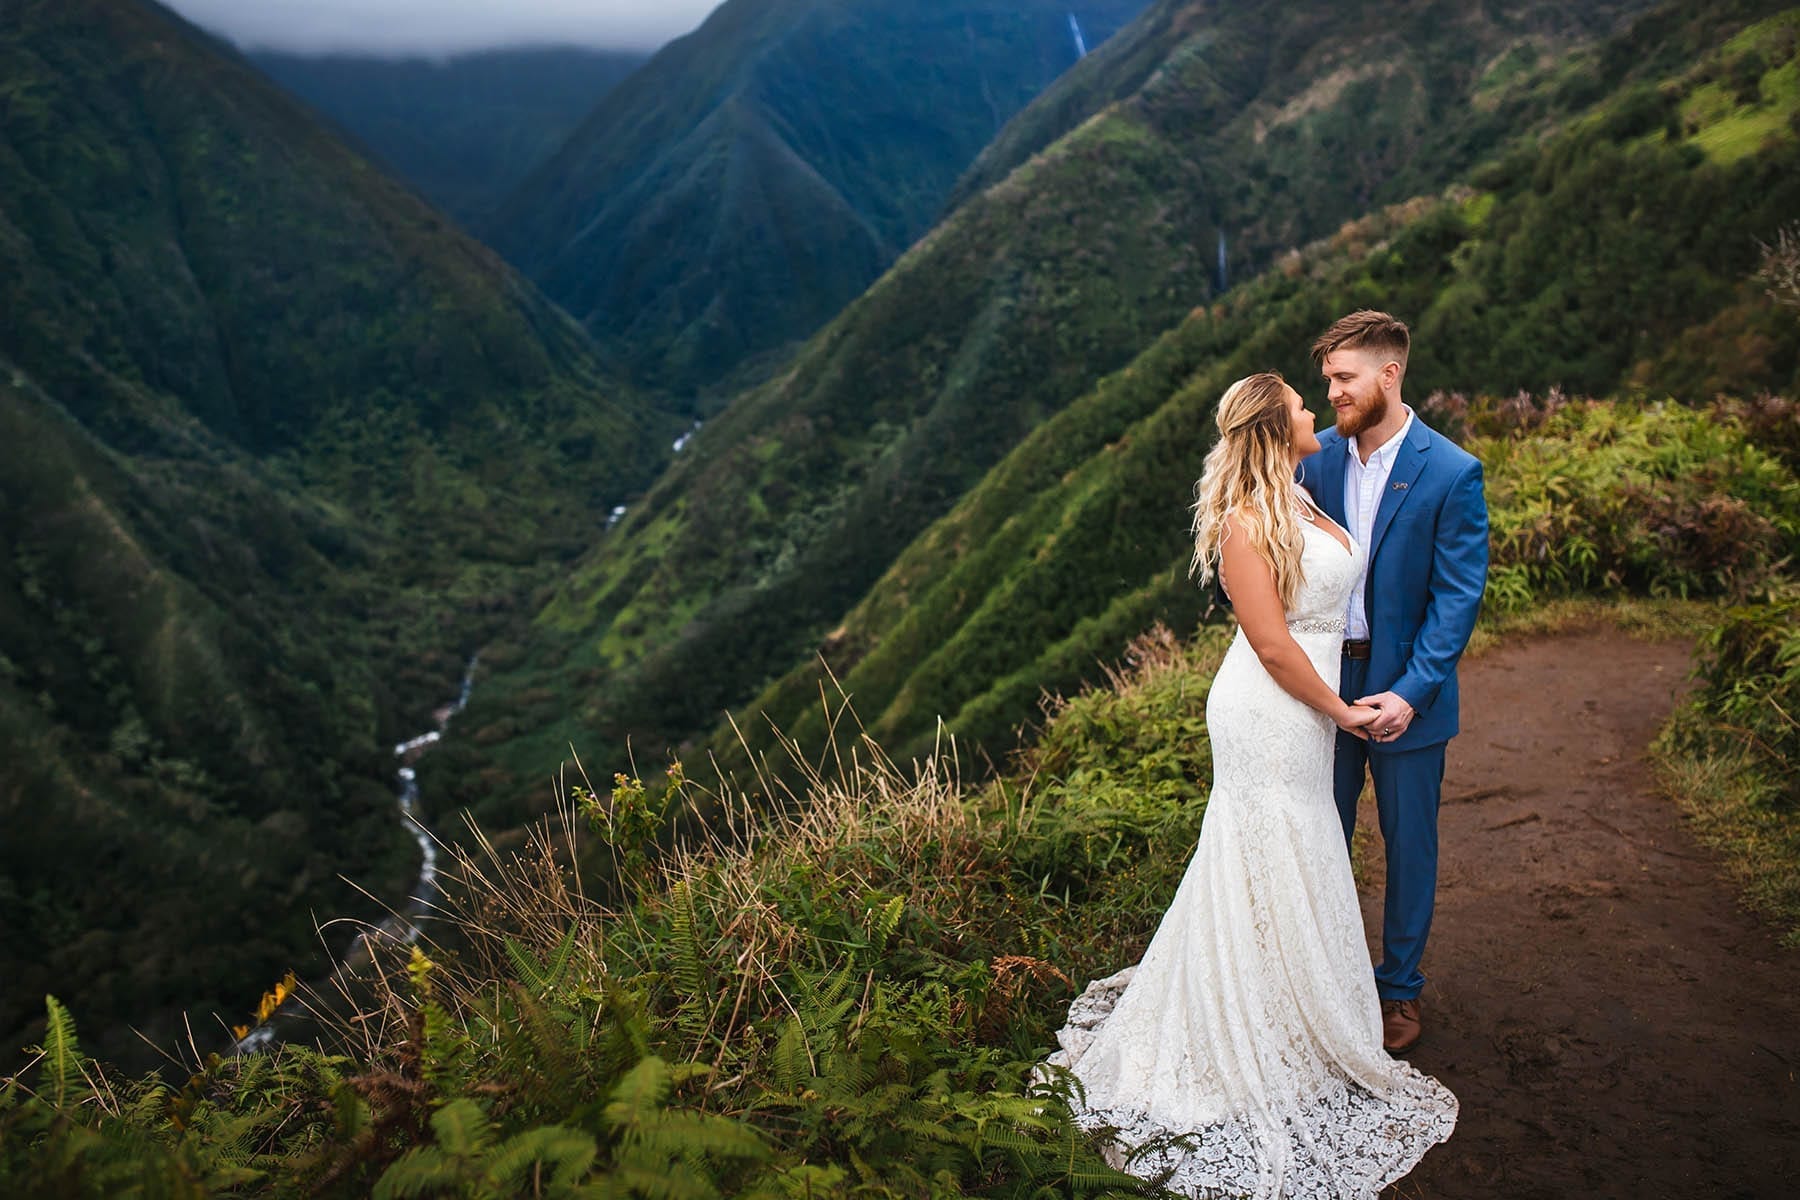 Hawaii adventure wedding photographer